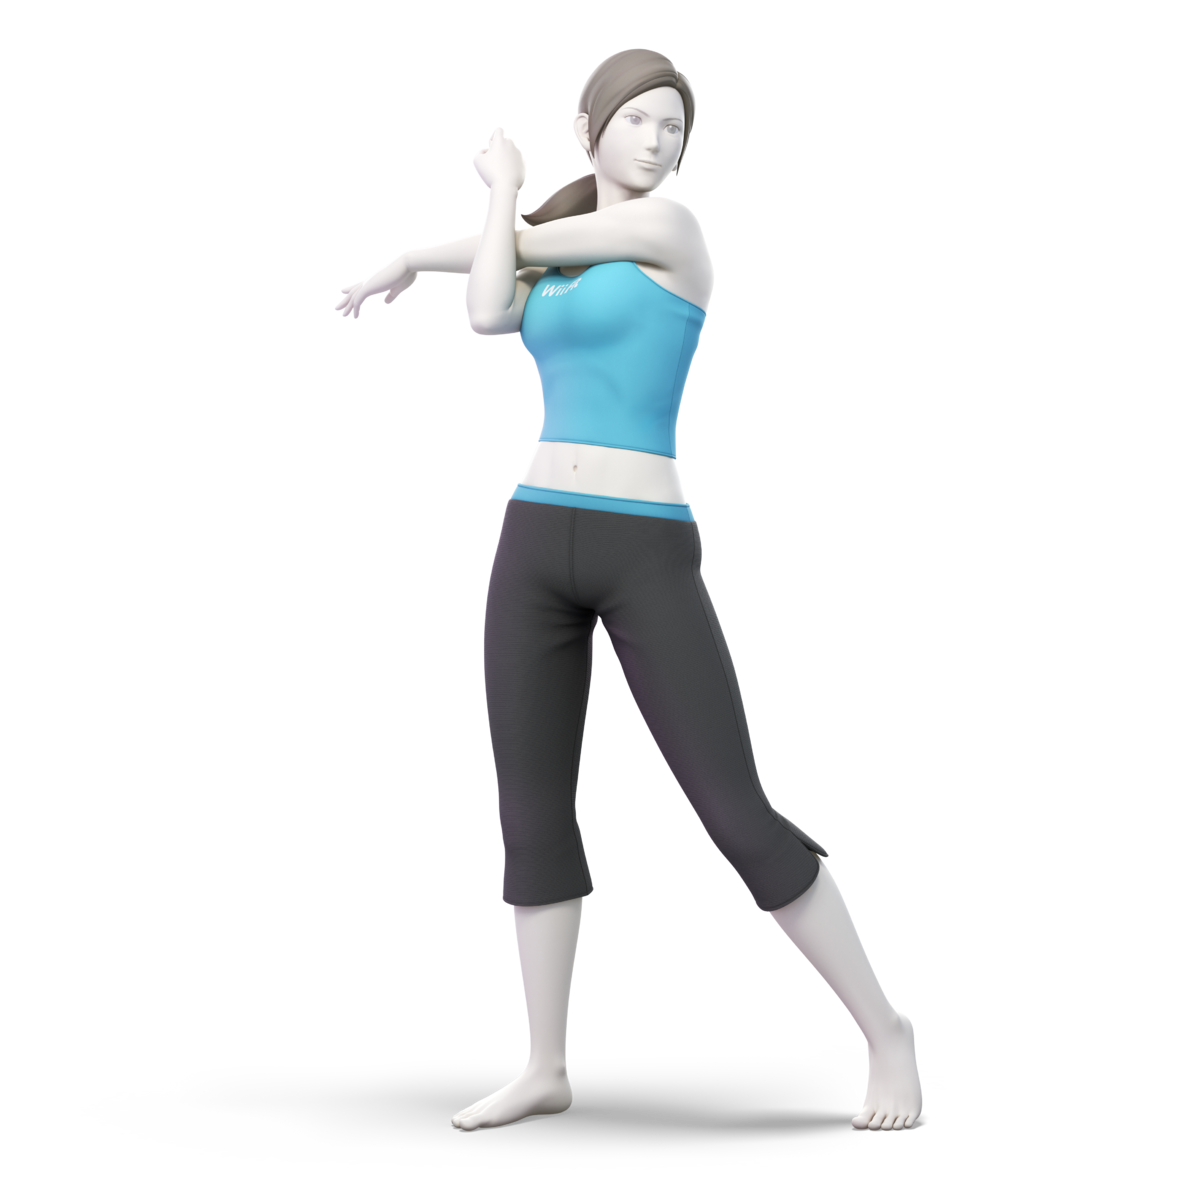 Springplank doel papier Wii Fit Trainer (SSBU) - SmashWiki, the Super Smash Bros. wiki